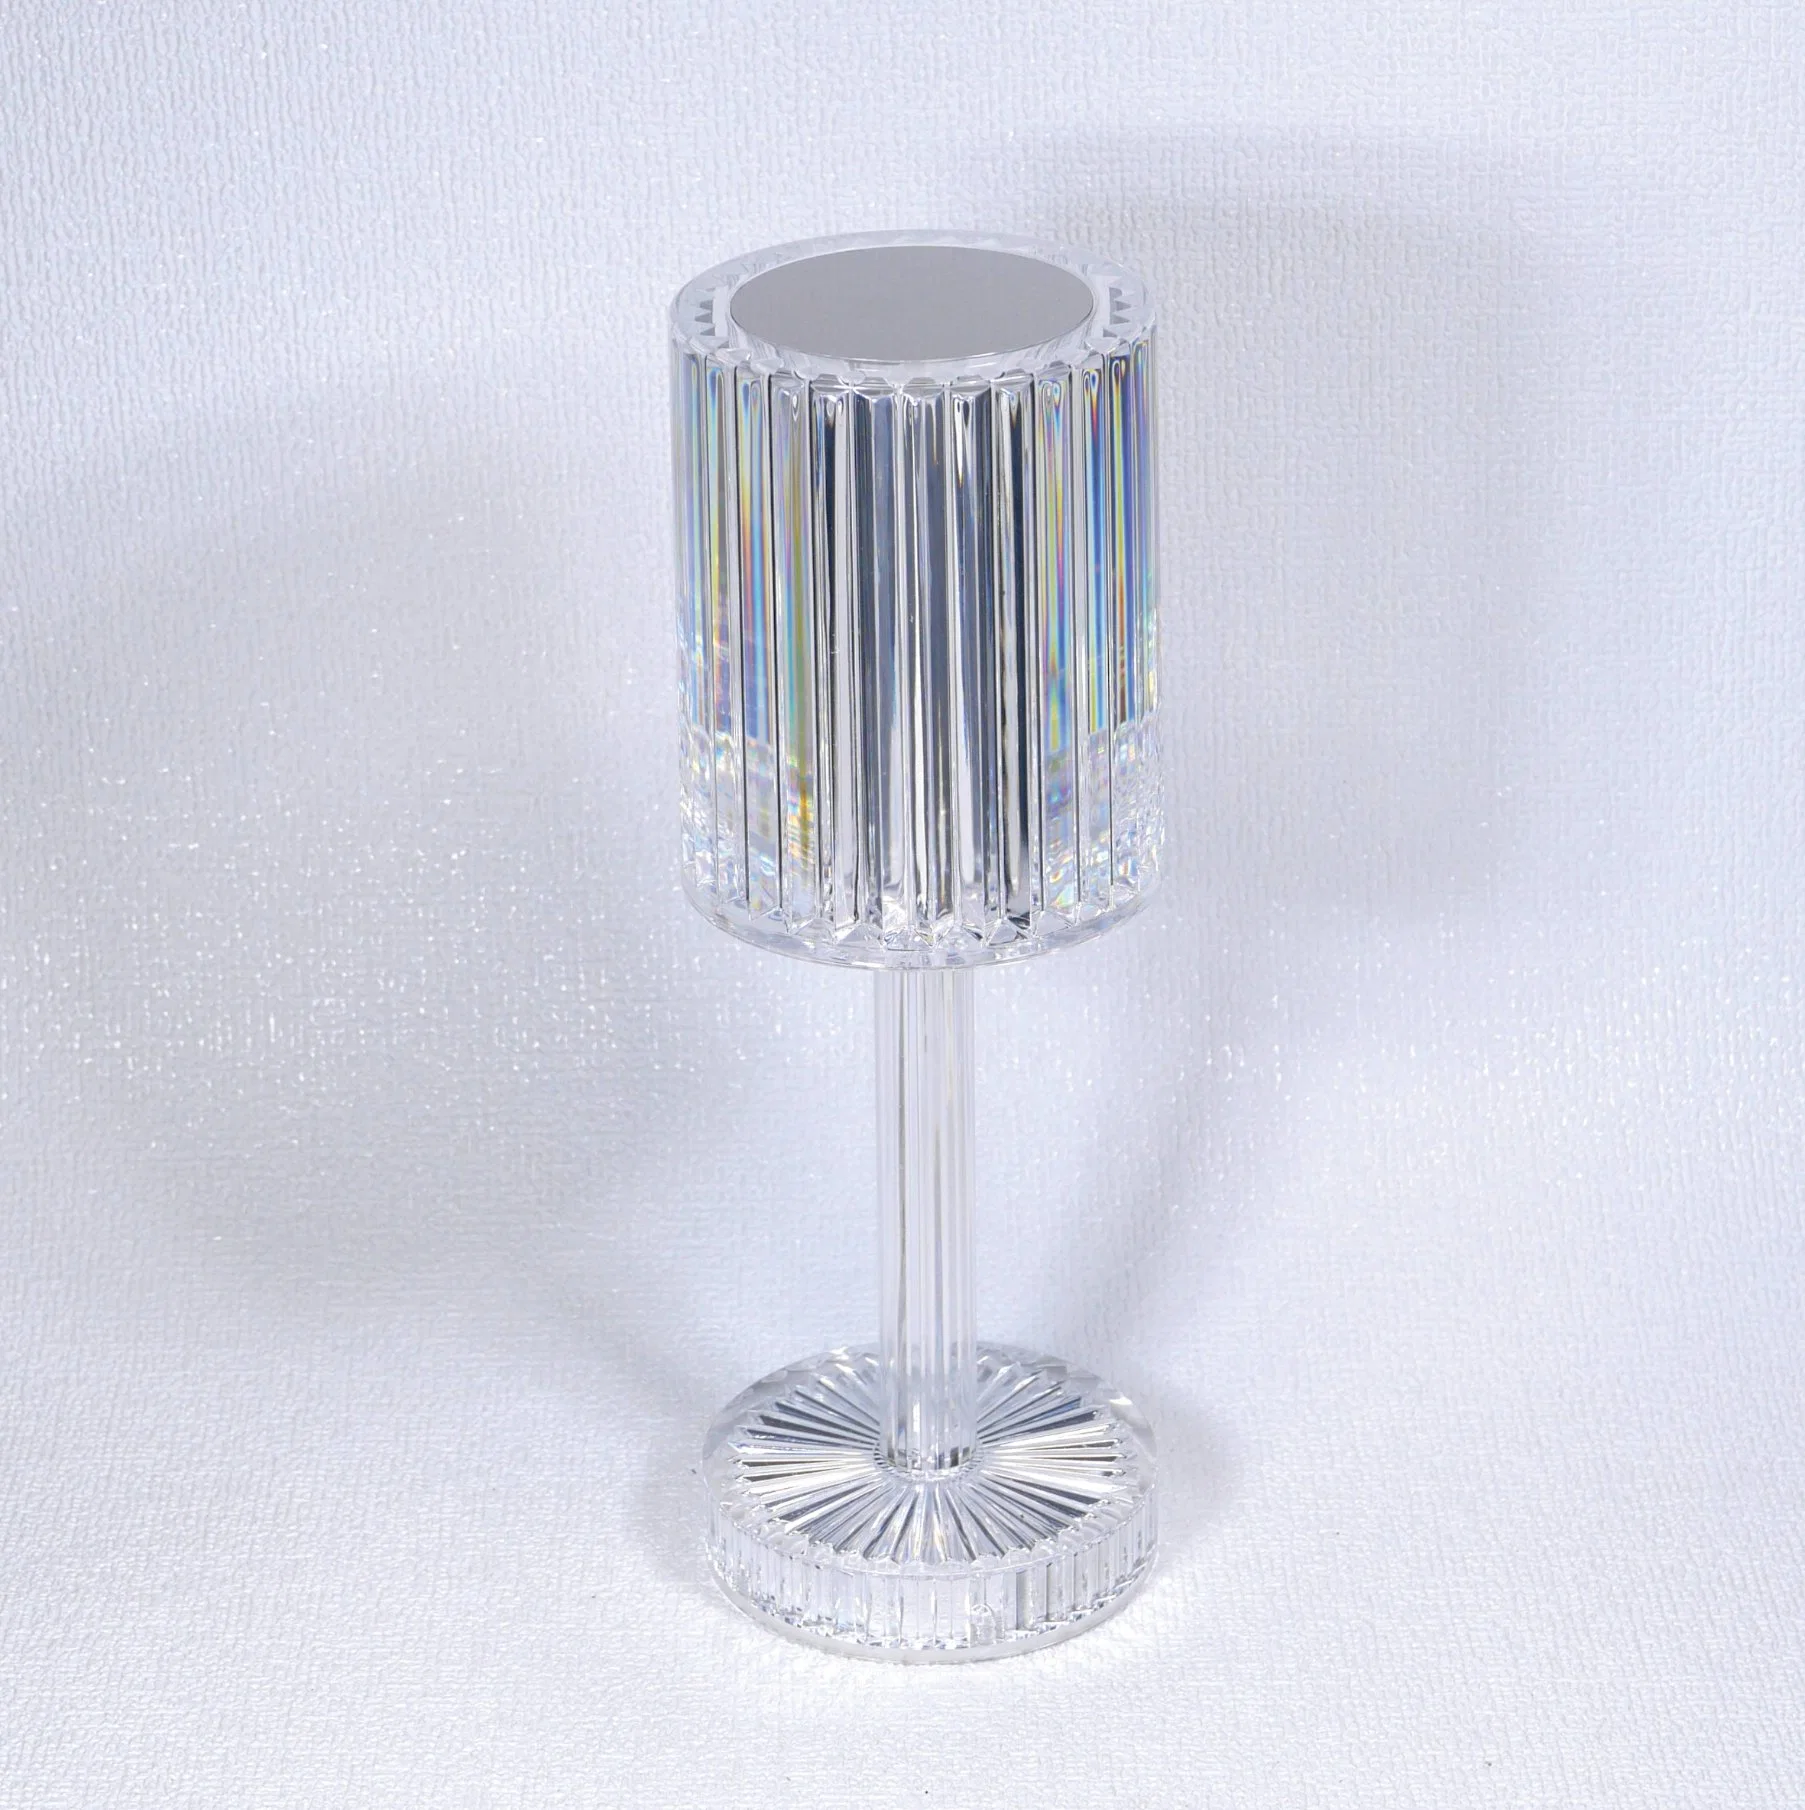 Iluminação Hisoon Popular estilo cristal RGB 16 tipo cor acrílico Candeeiro de mesa com controlo remoto